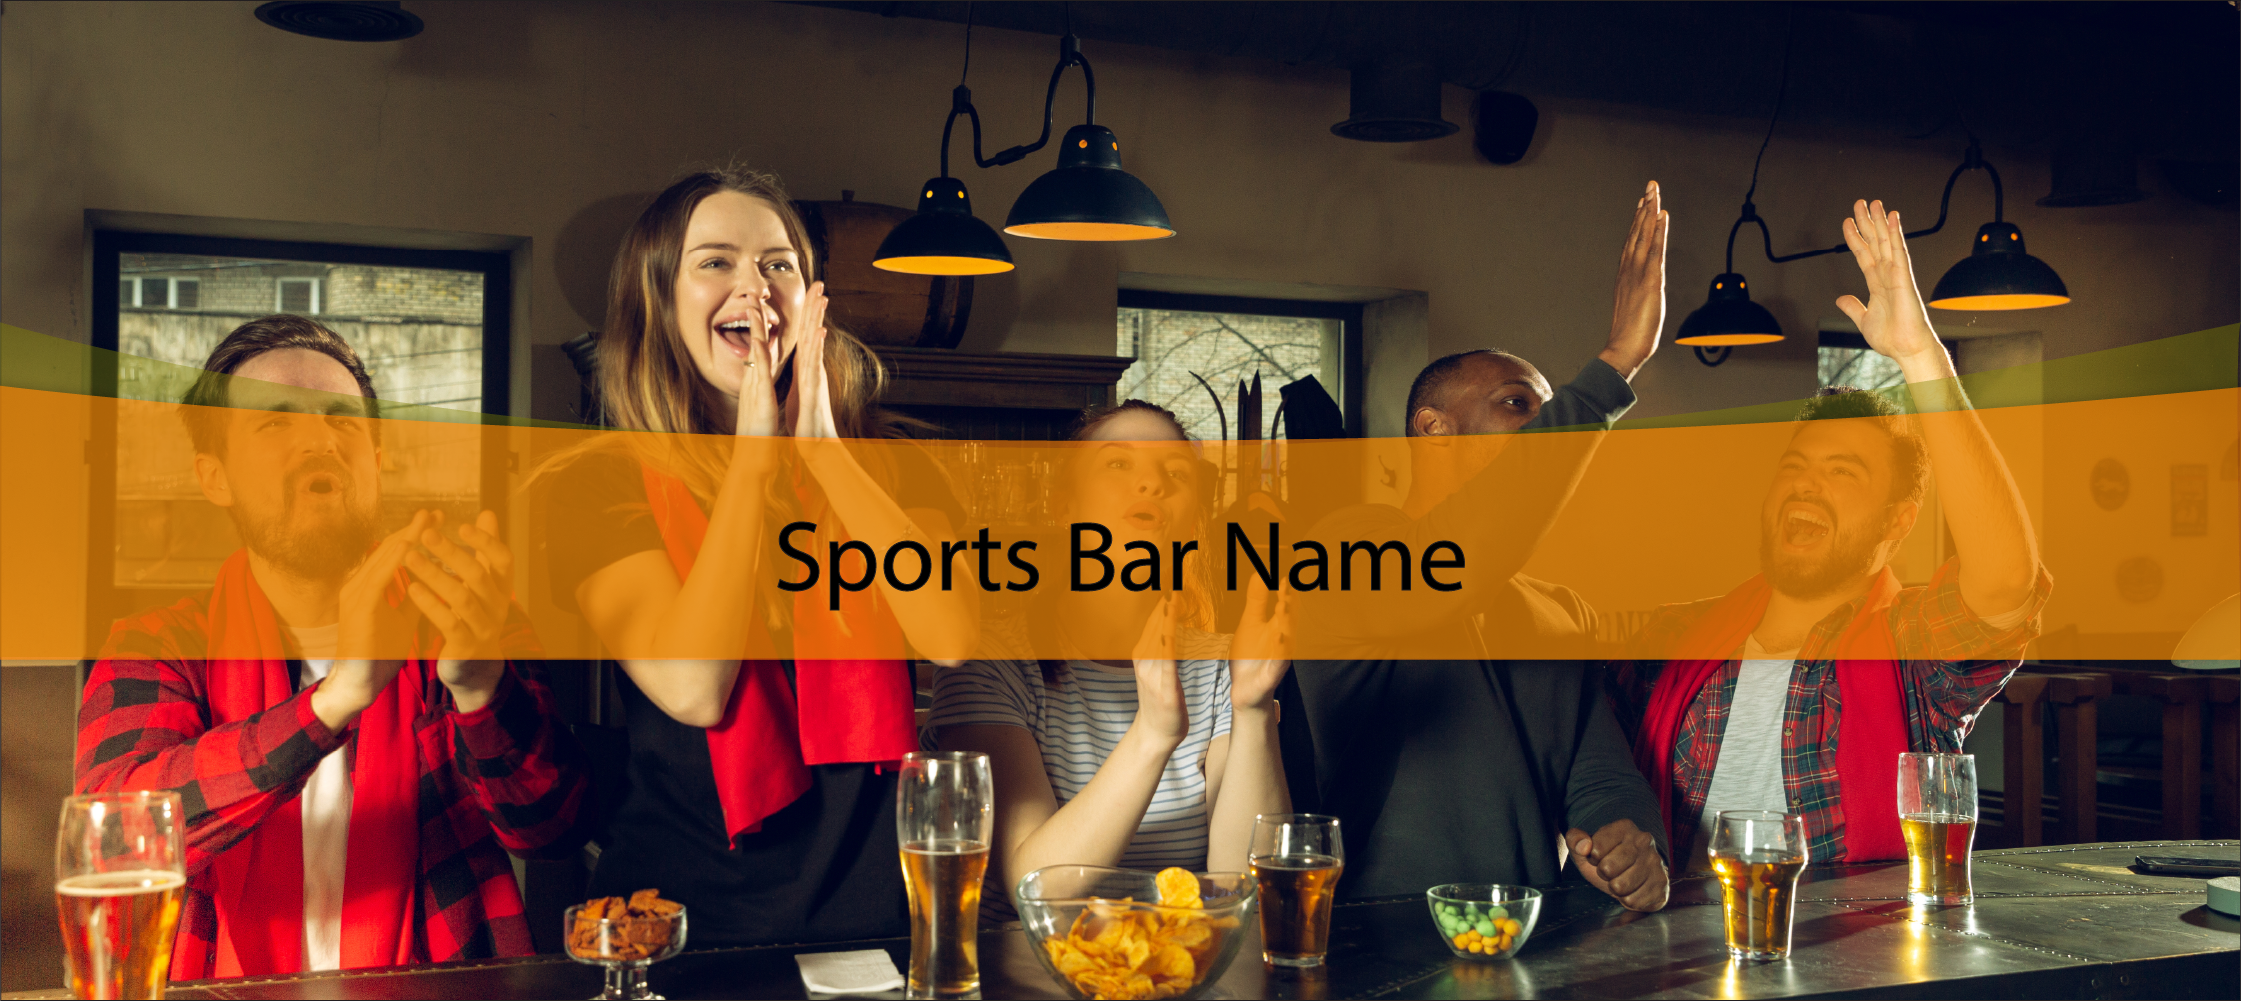 Sports Bar Names